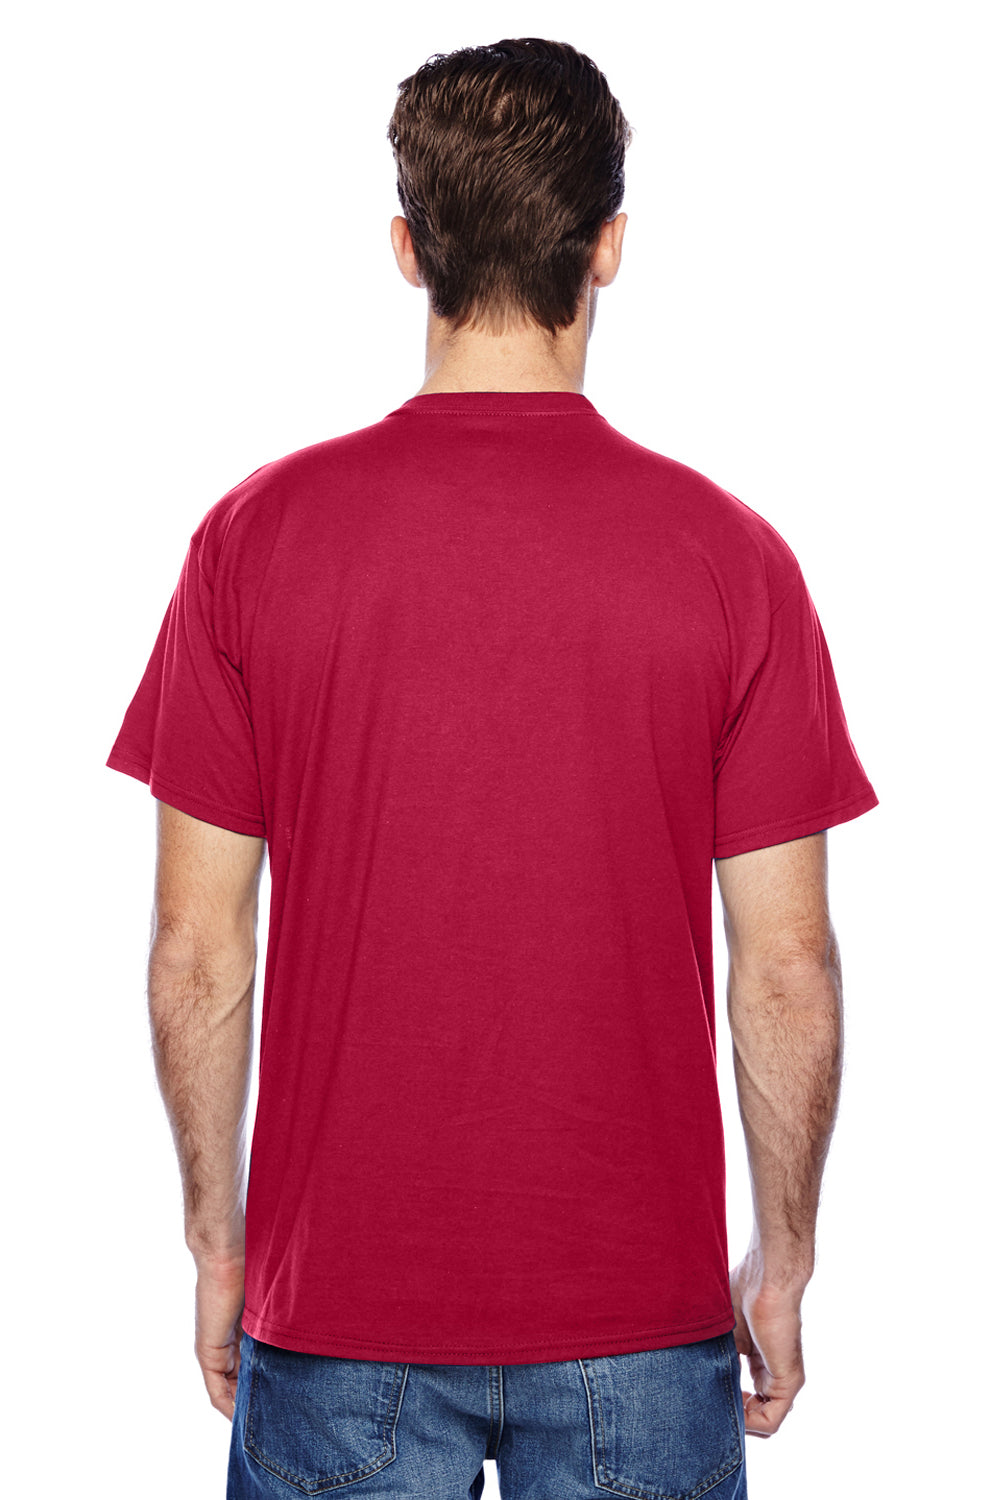 Hanes P4200 Mens X-Temp Moisture Wicking Short Sleeve Crewneck T-Shirt Red Back